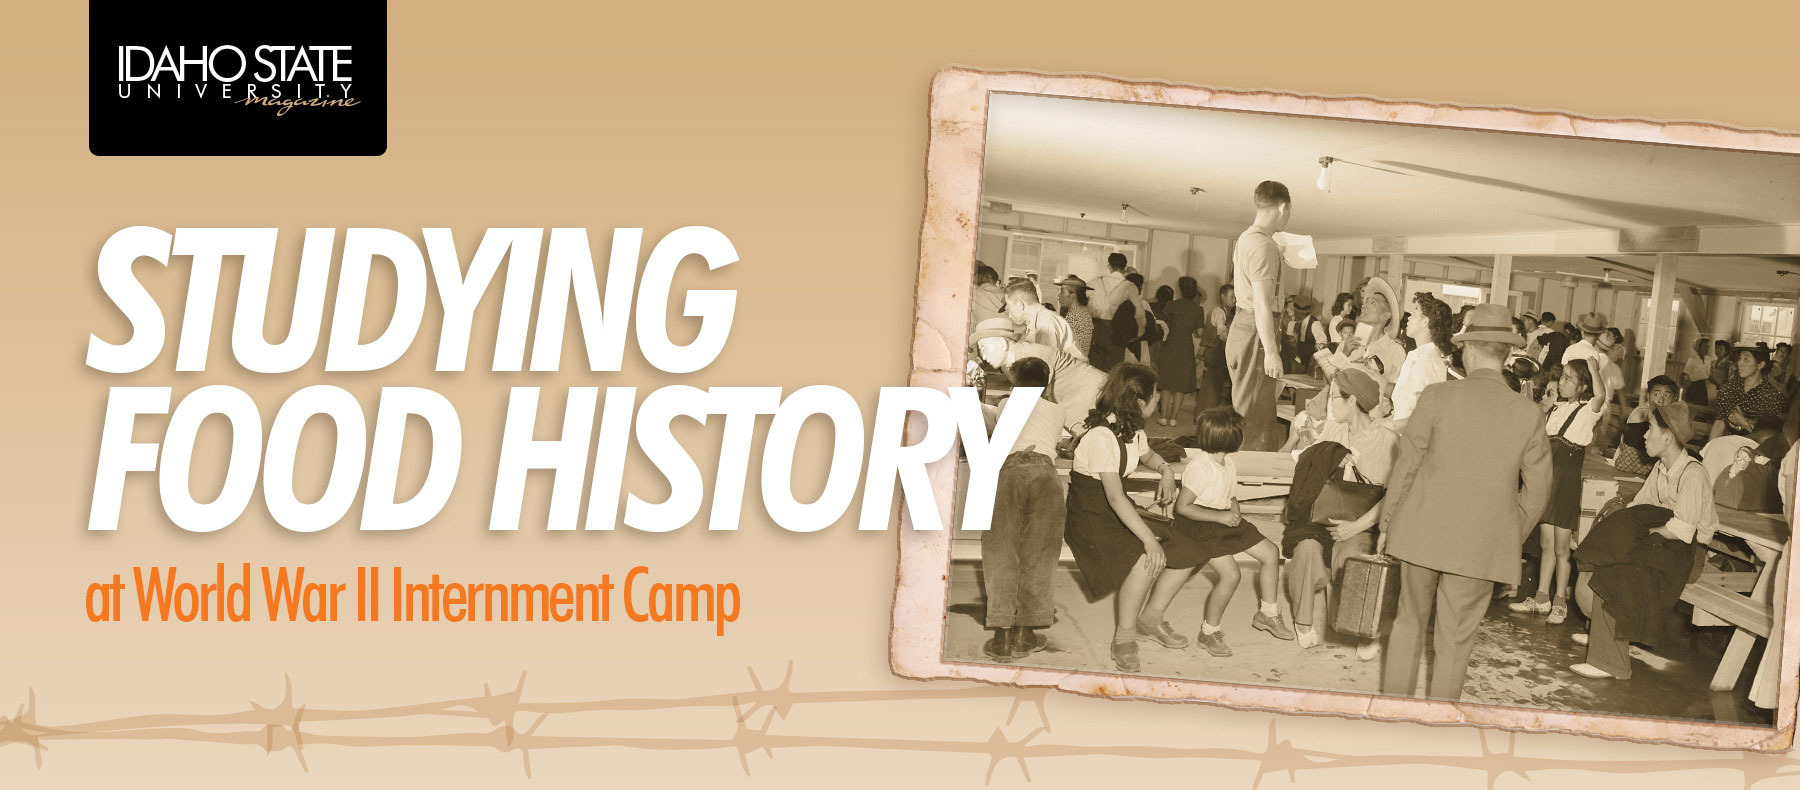 Studying food history at World War II internment camp